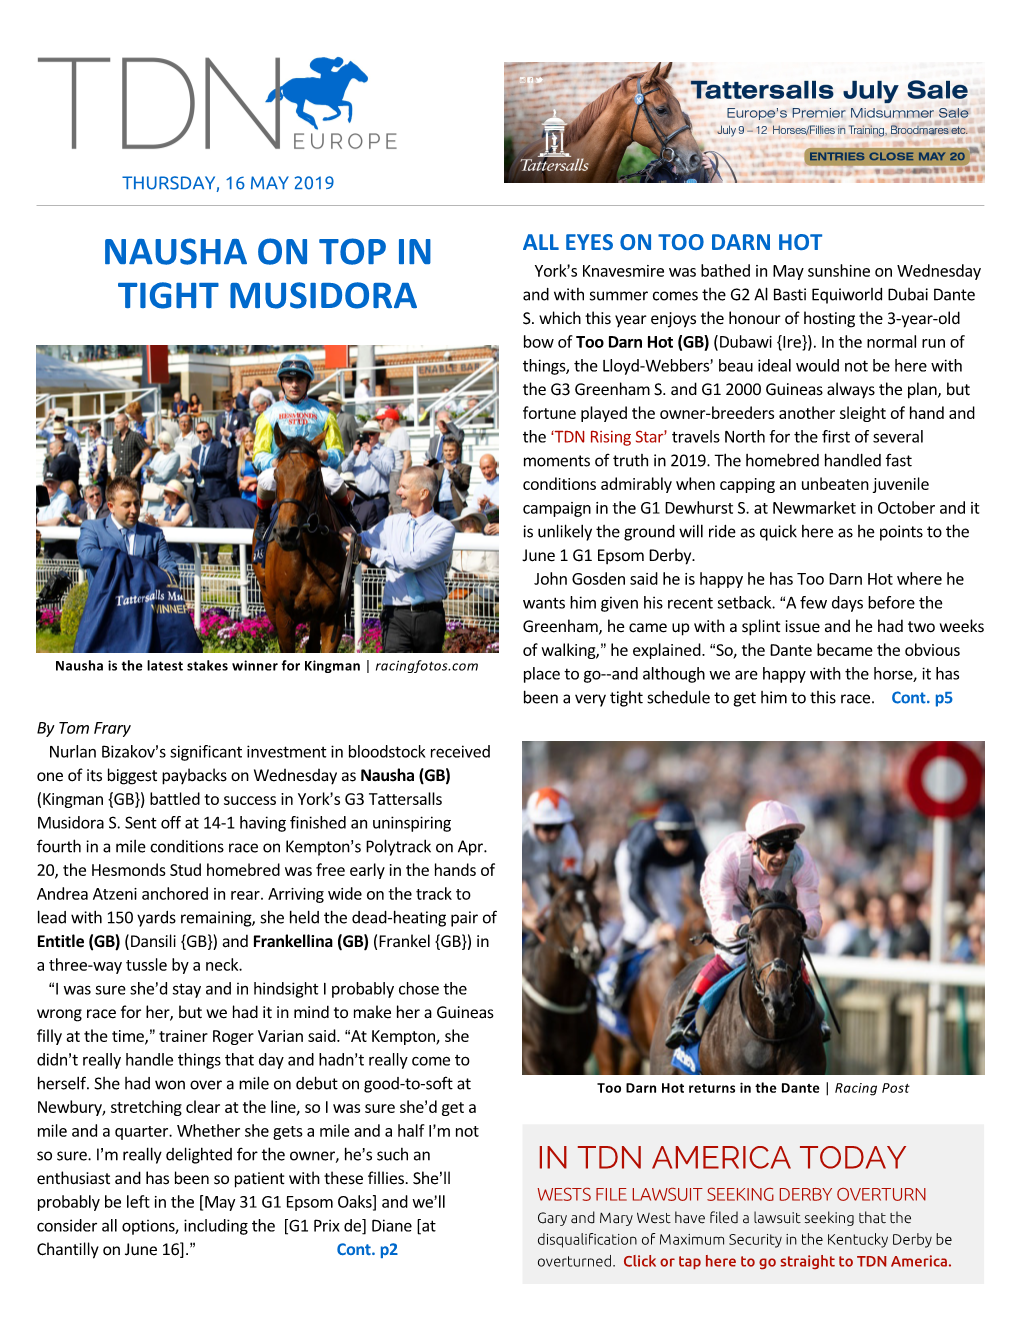 Nausha on Top in Tight Musidora Cont